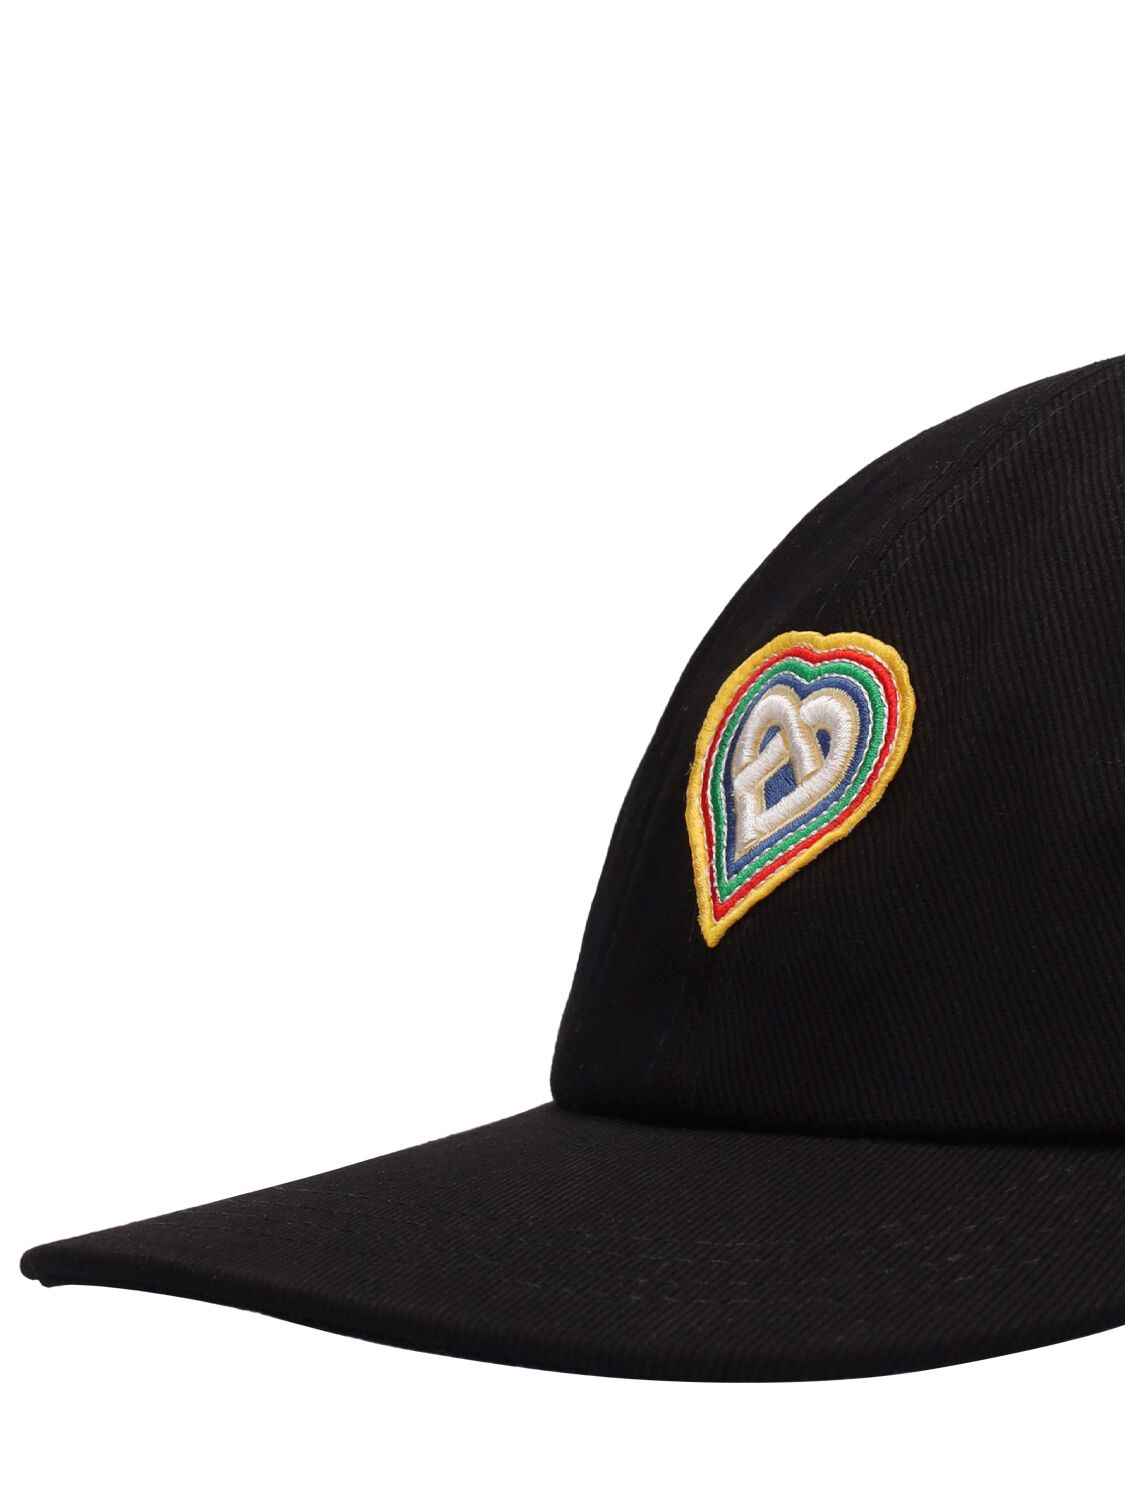 Shop Casablanca Heart Embroidered Baseball Cap In Black